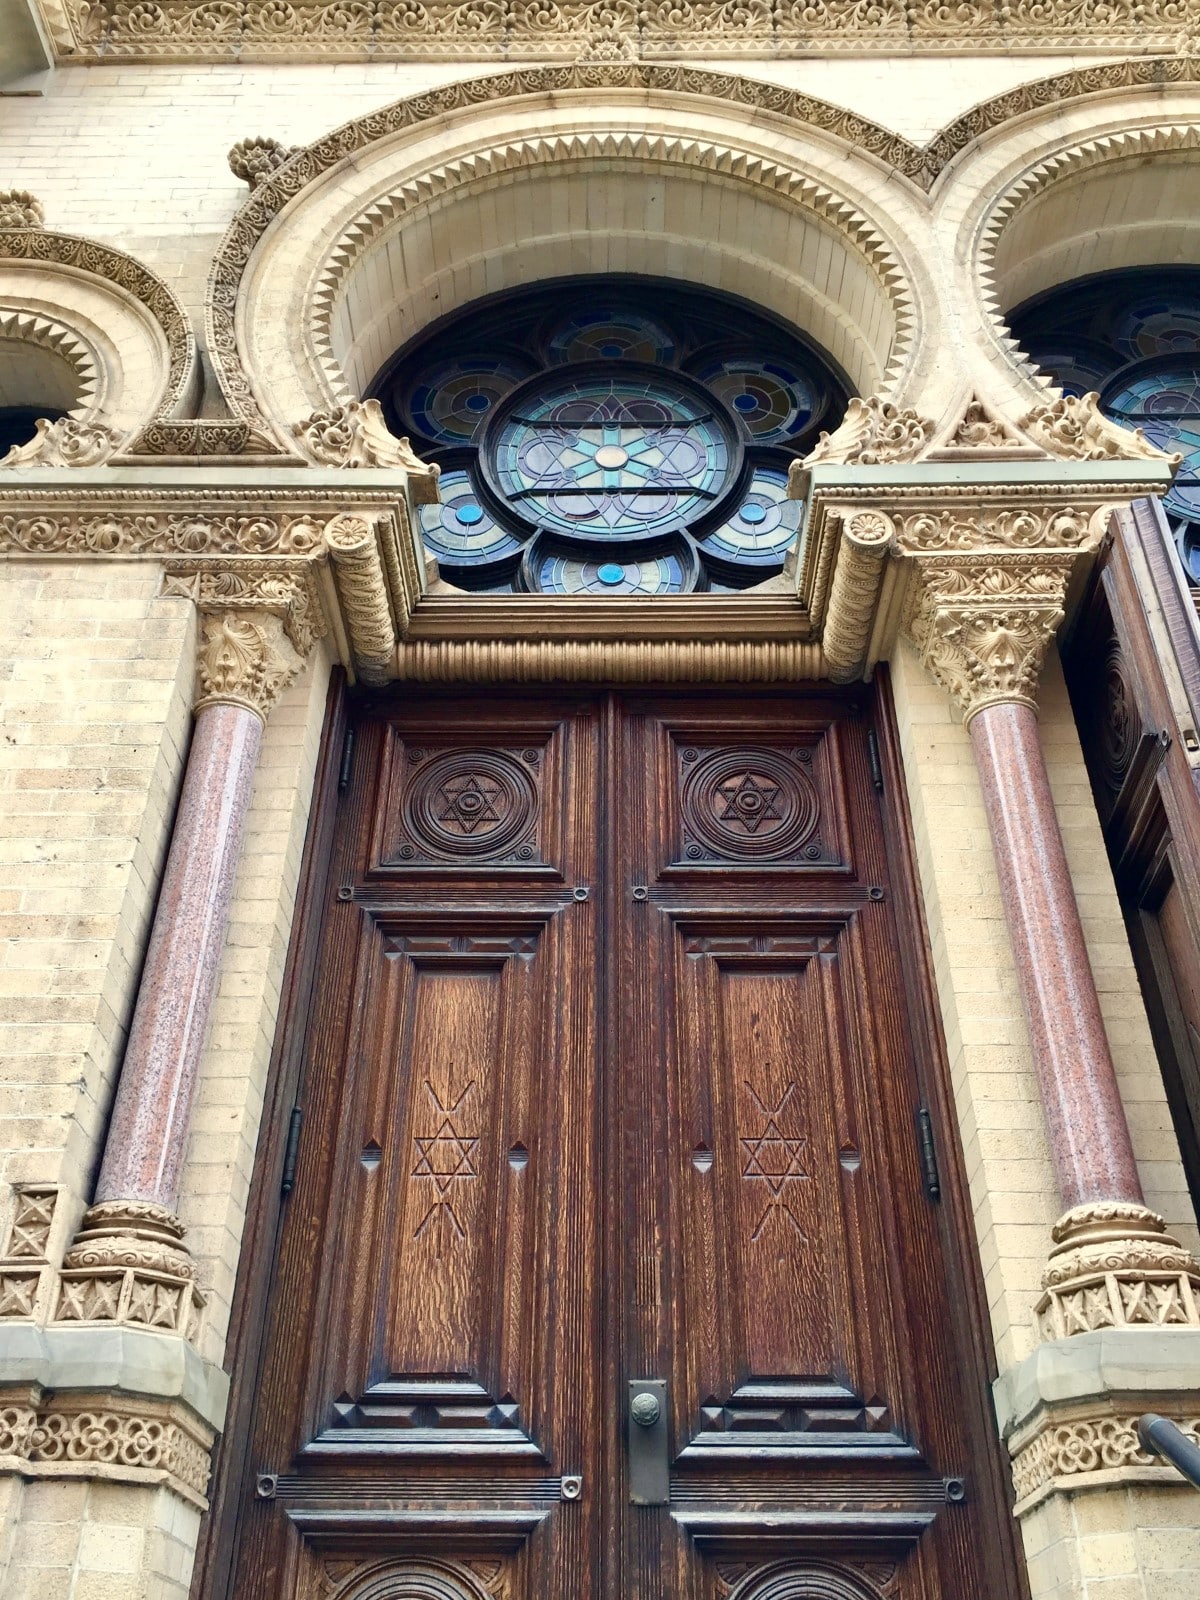 Doors at the Eldridge Street synagogue in New York City